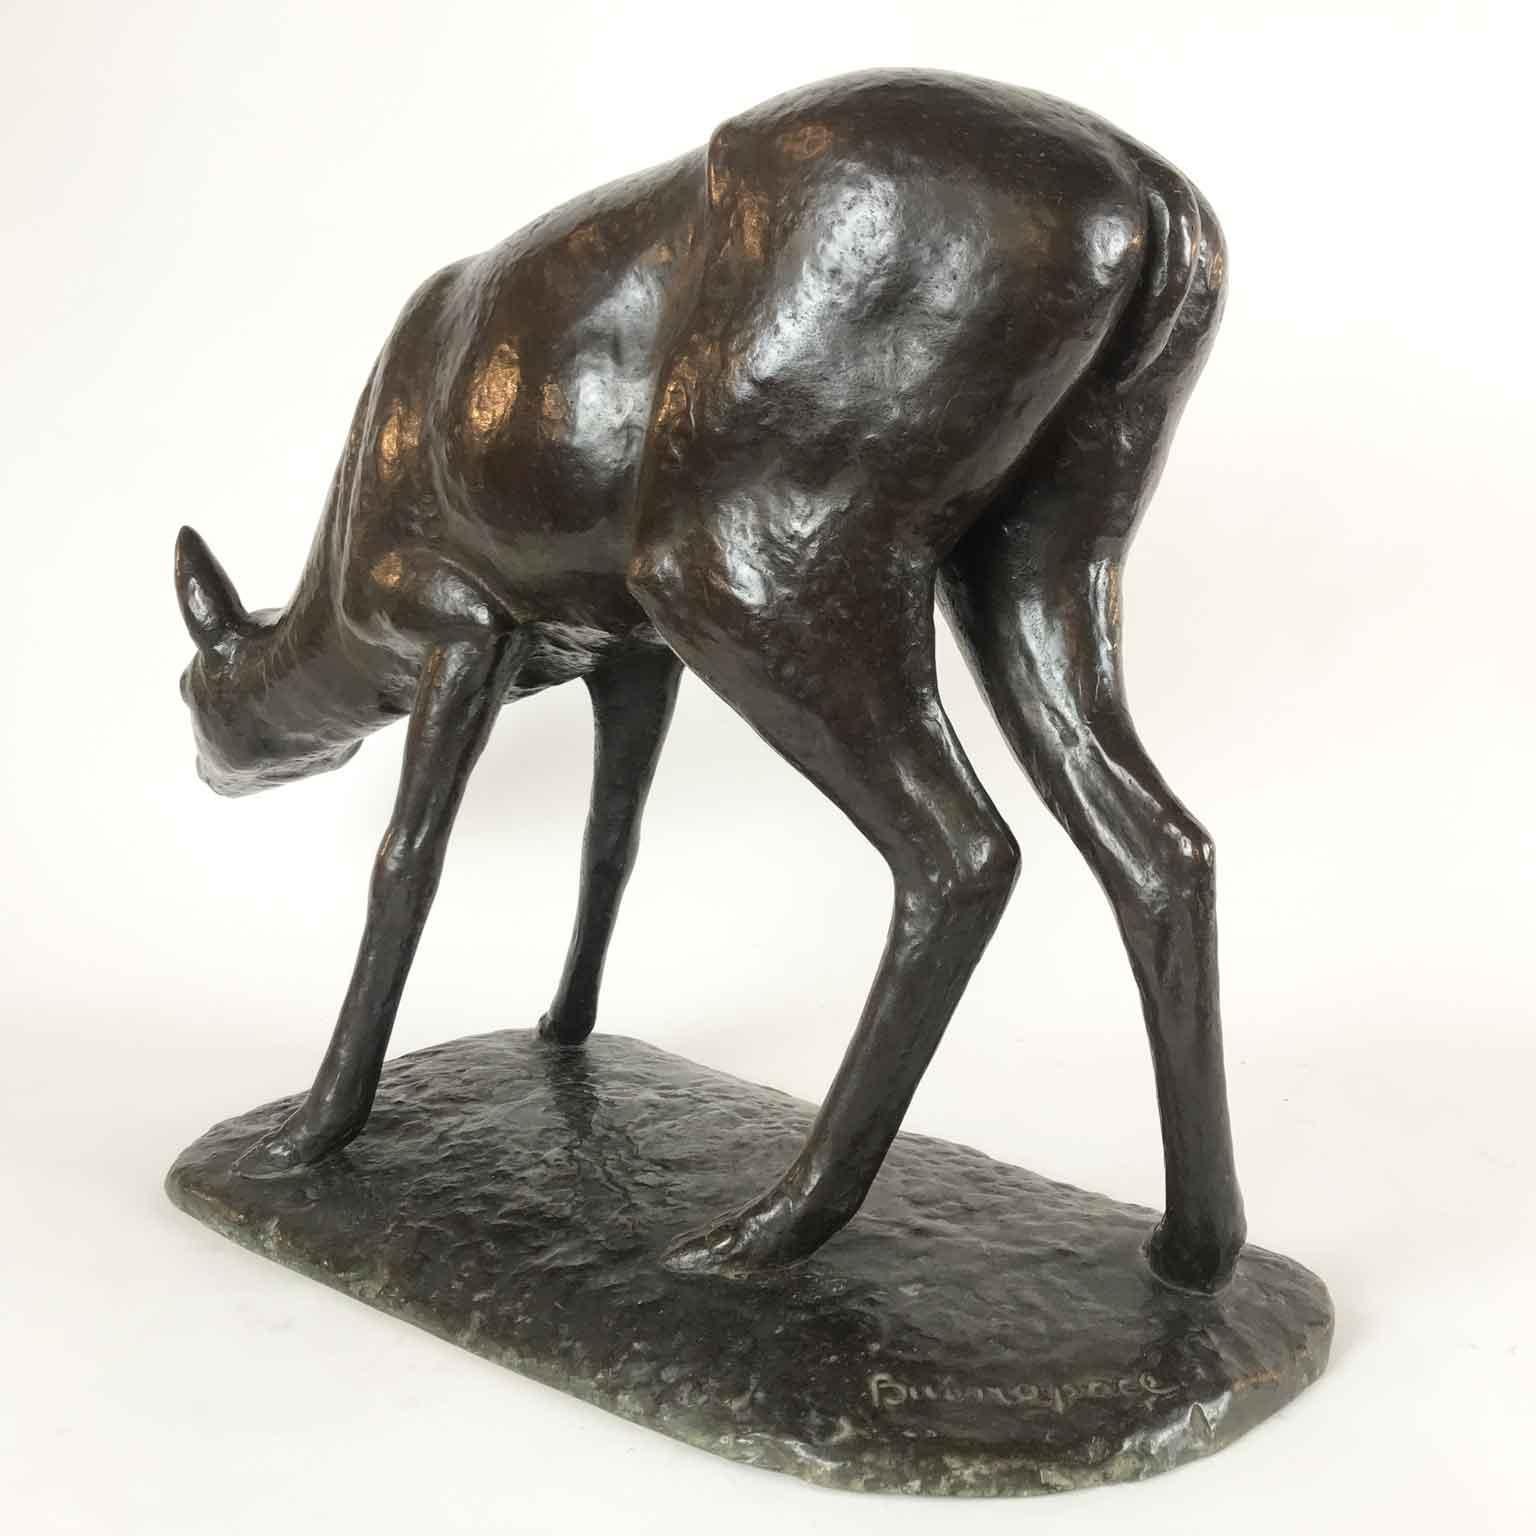 Deer Figure by Italian Buonapace Art Deco Animalier Bronze Sculpture 1930 circa  For Sale 3